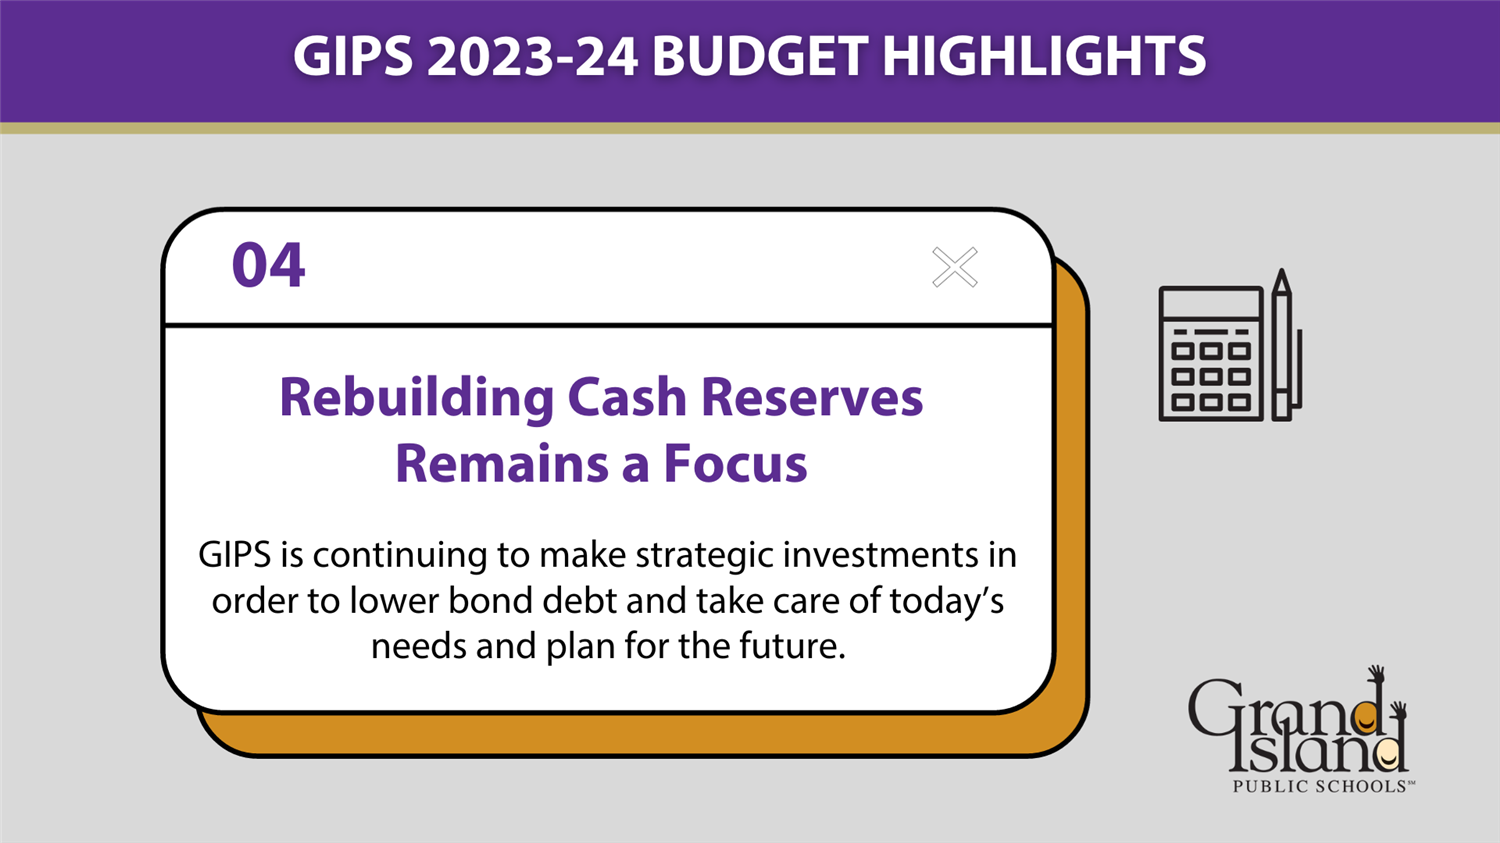 GIPS Budget Highlight 04 - Rebuilding Cash Reserves Remains a Focus